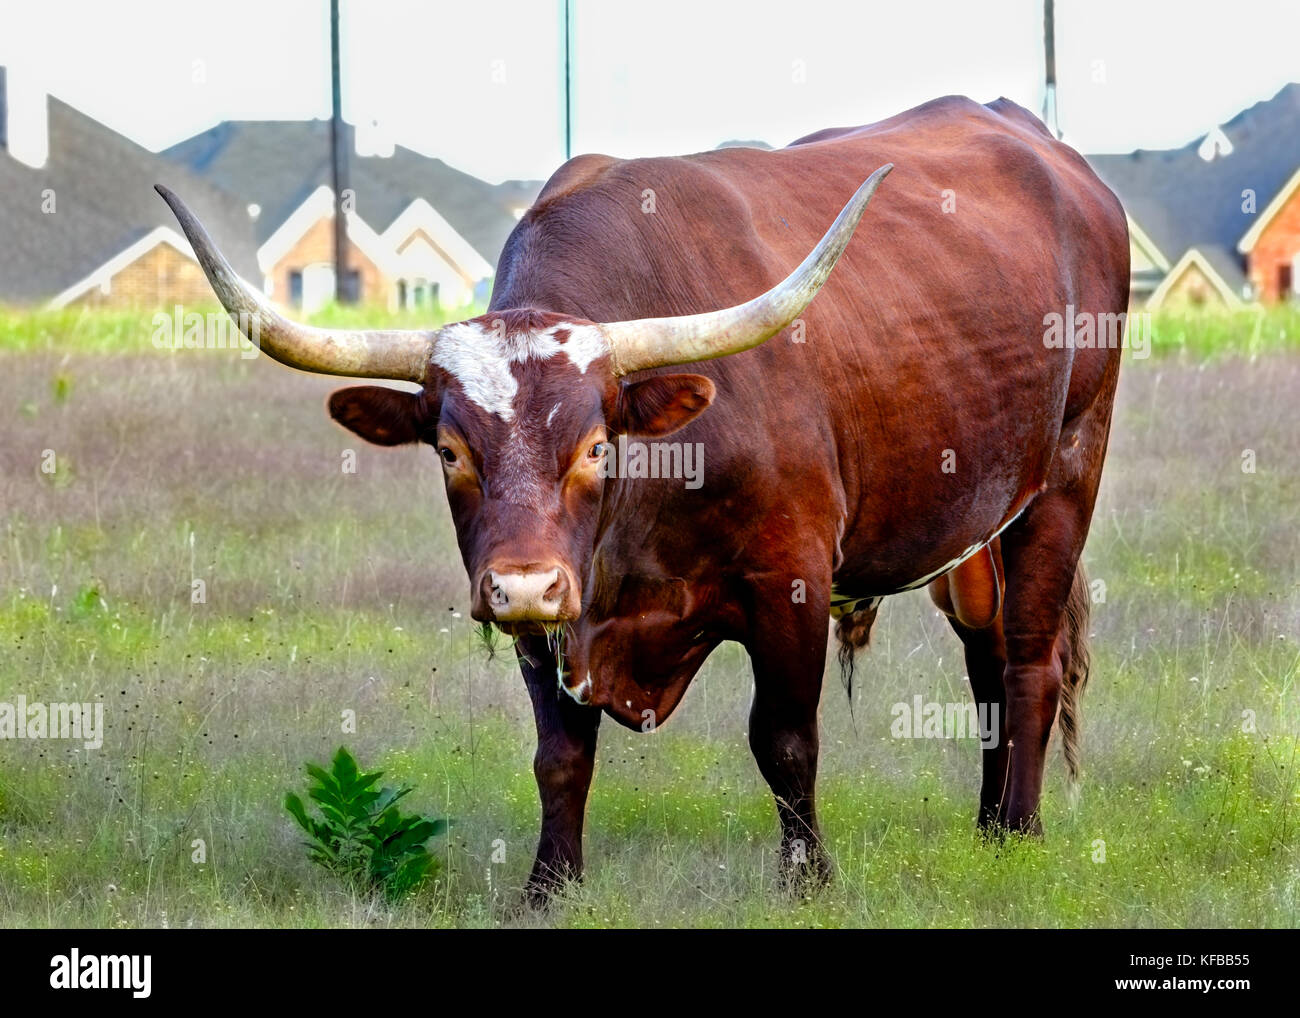 Texas Longhorn Bull Grazing in Urban Field Stock Photo